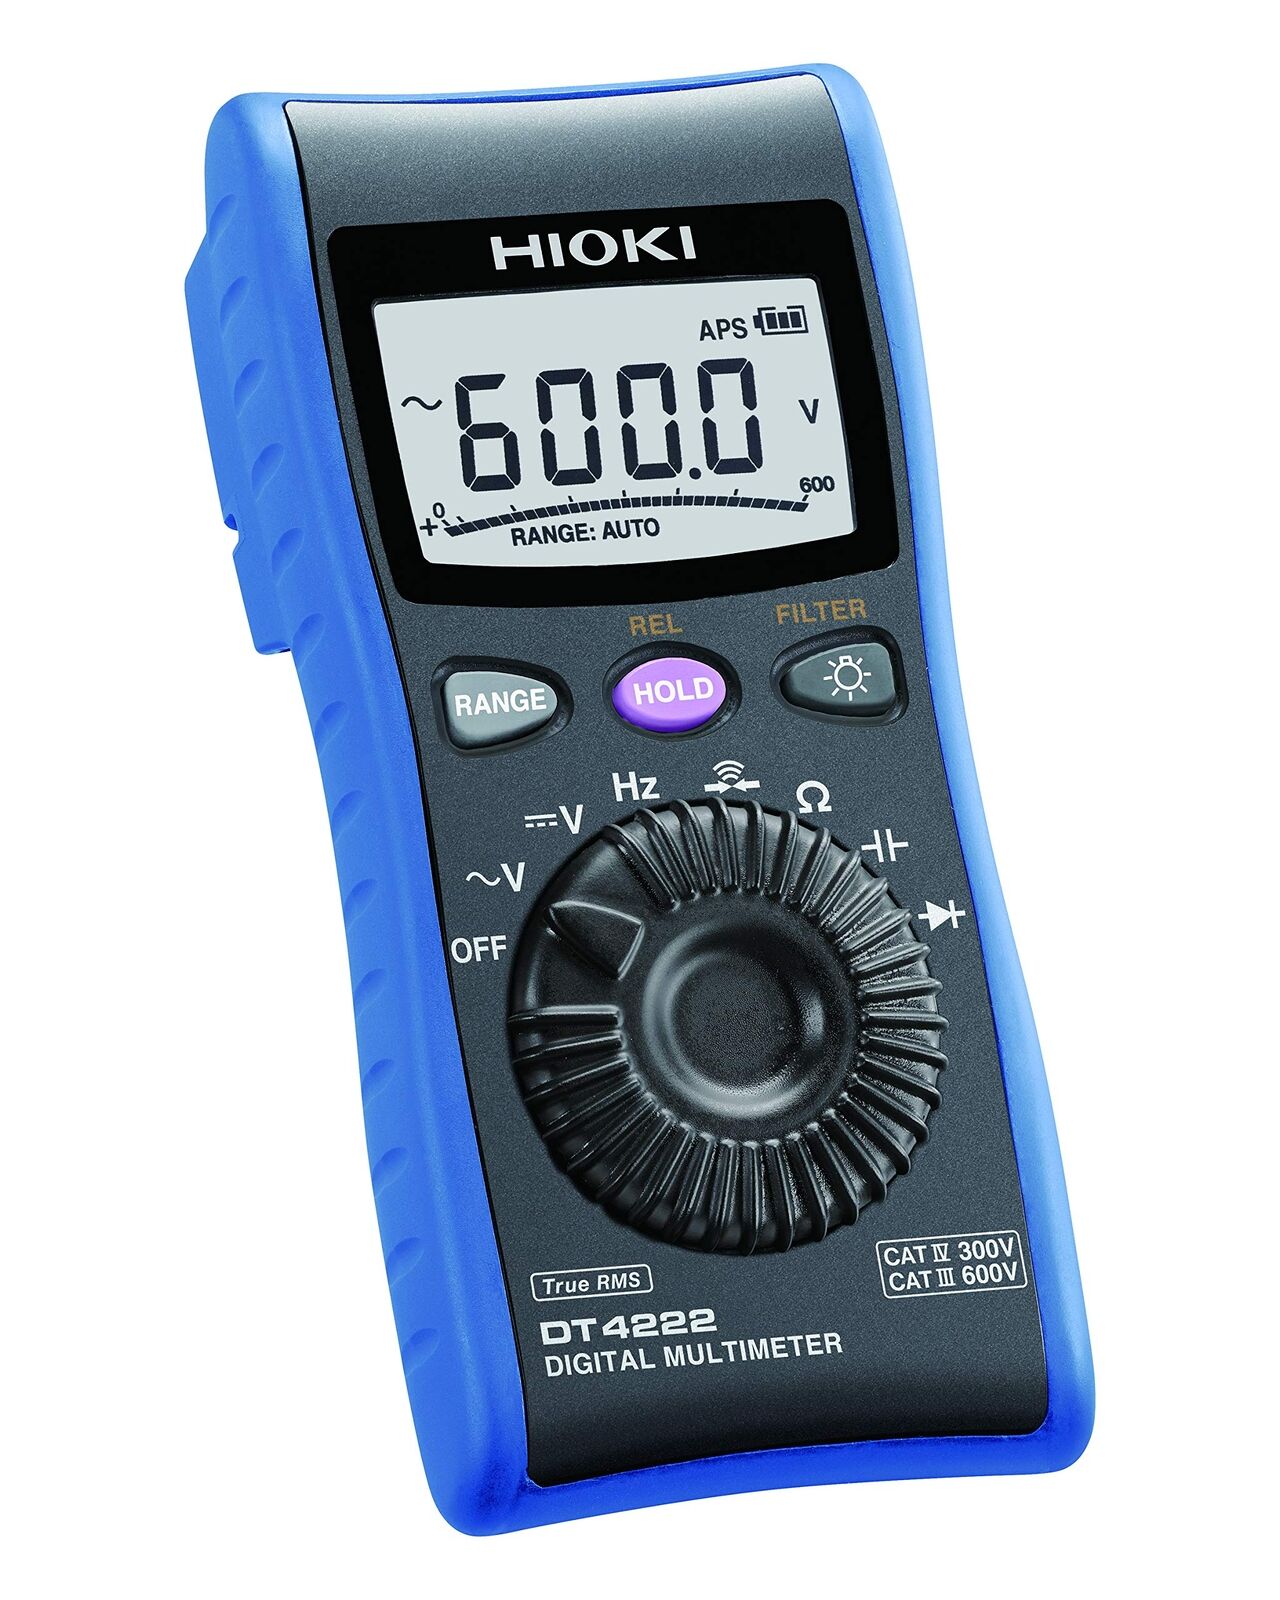 Hioki Digital Multimeter Dt4222 Slim Model Tester Dmm Made In Japan DT4222